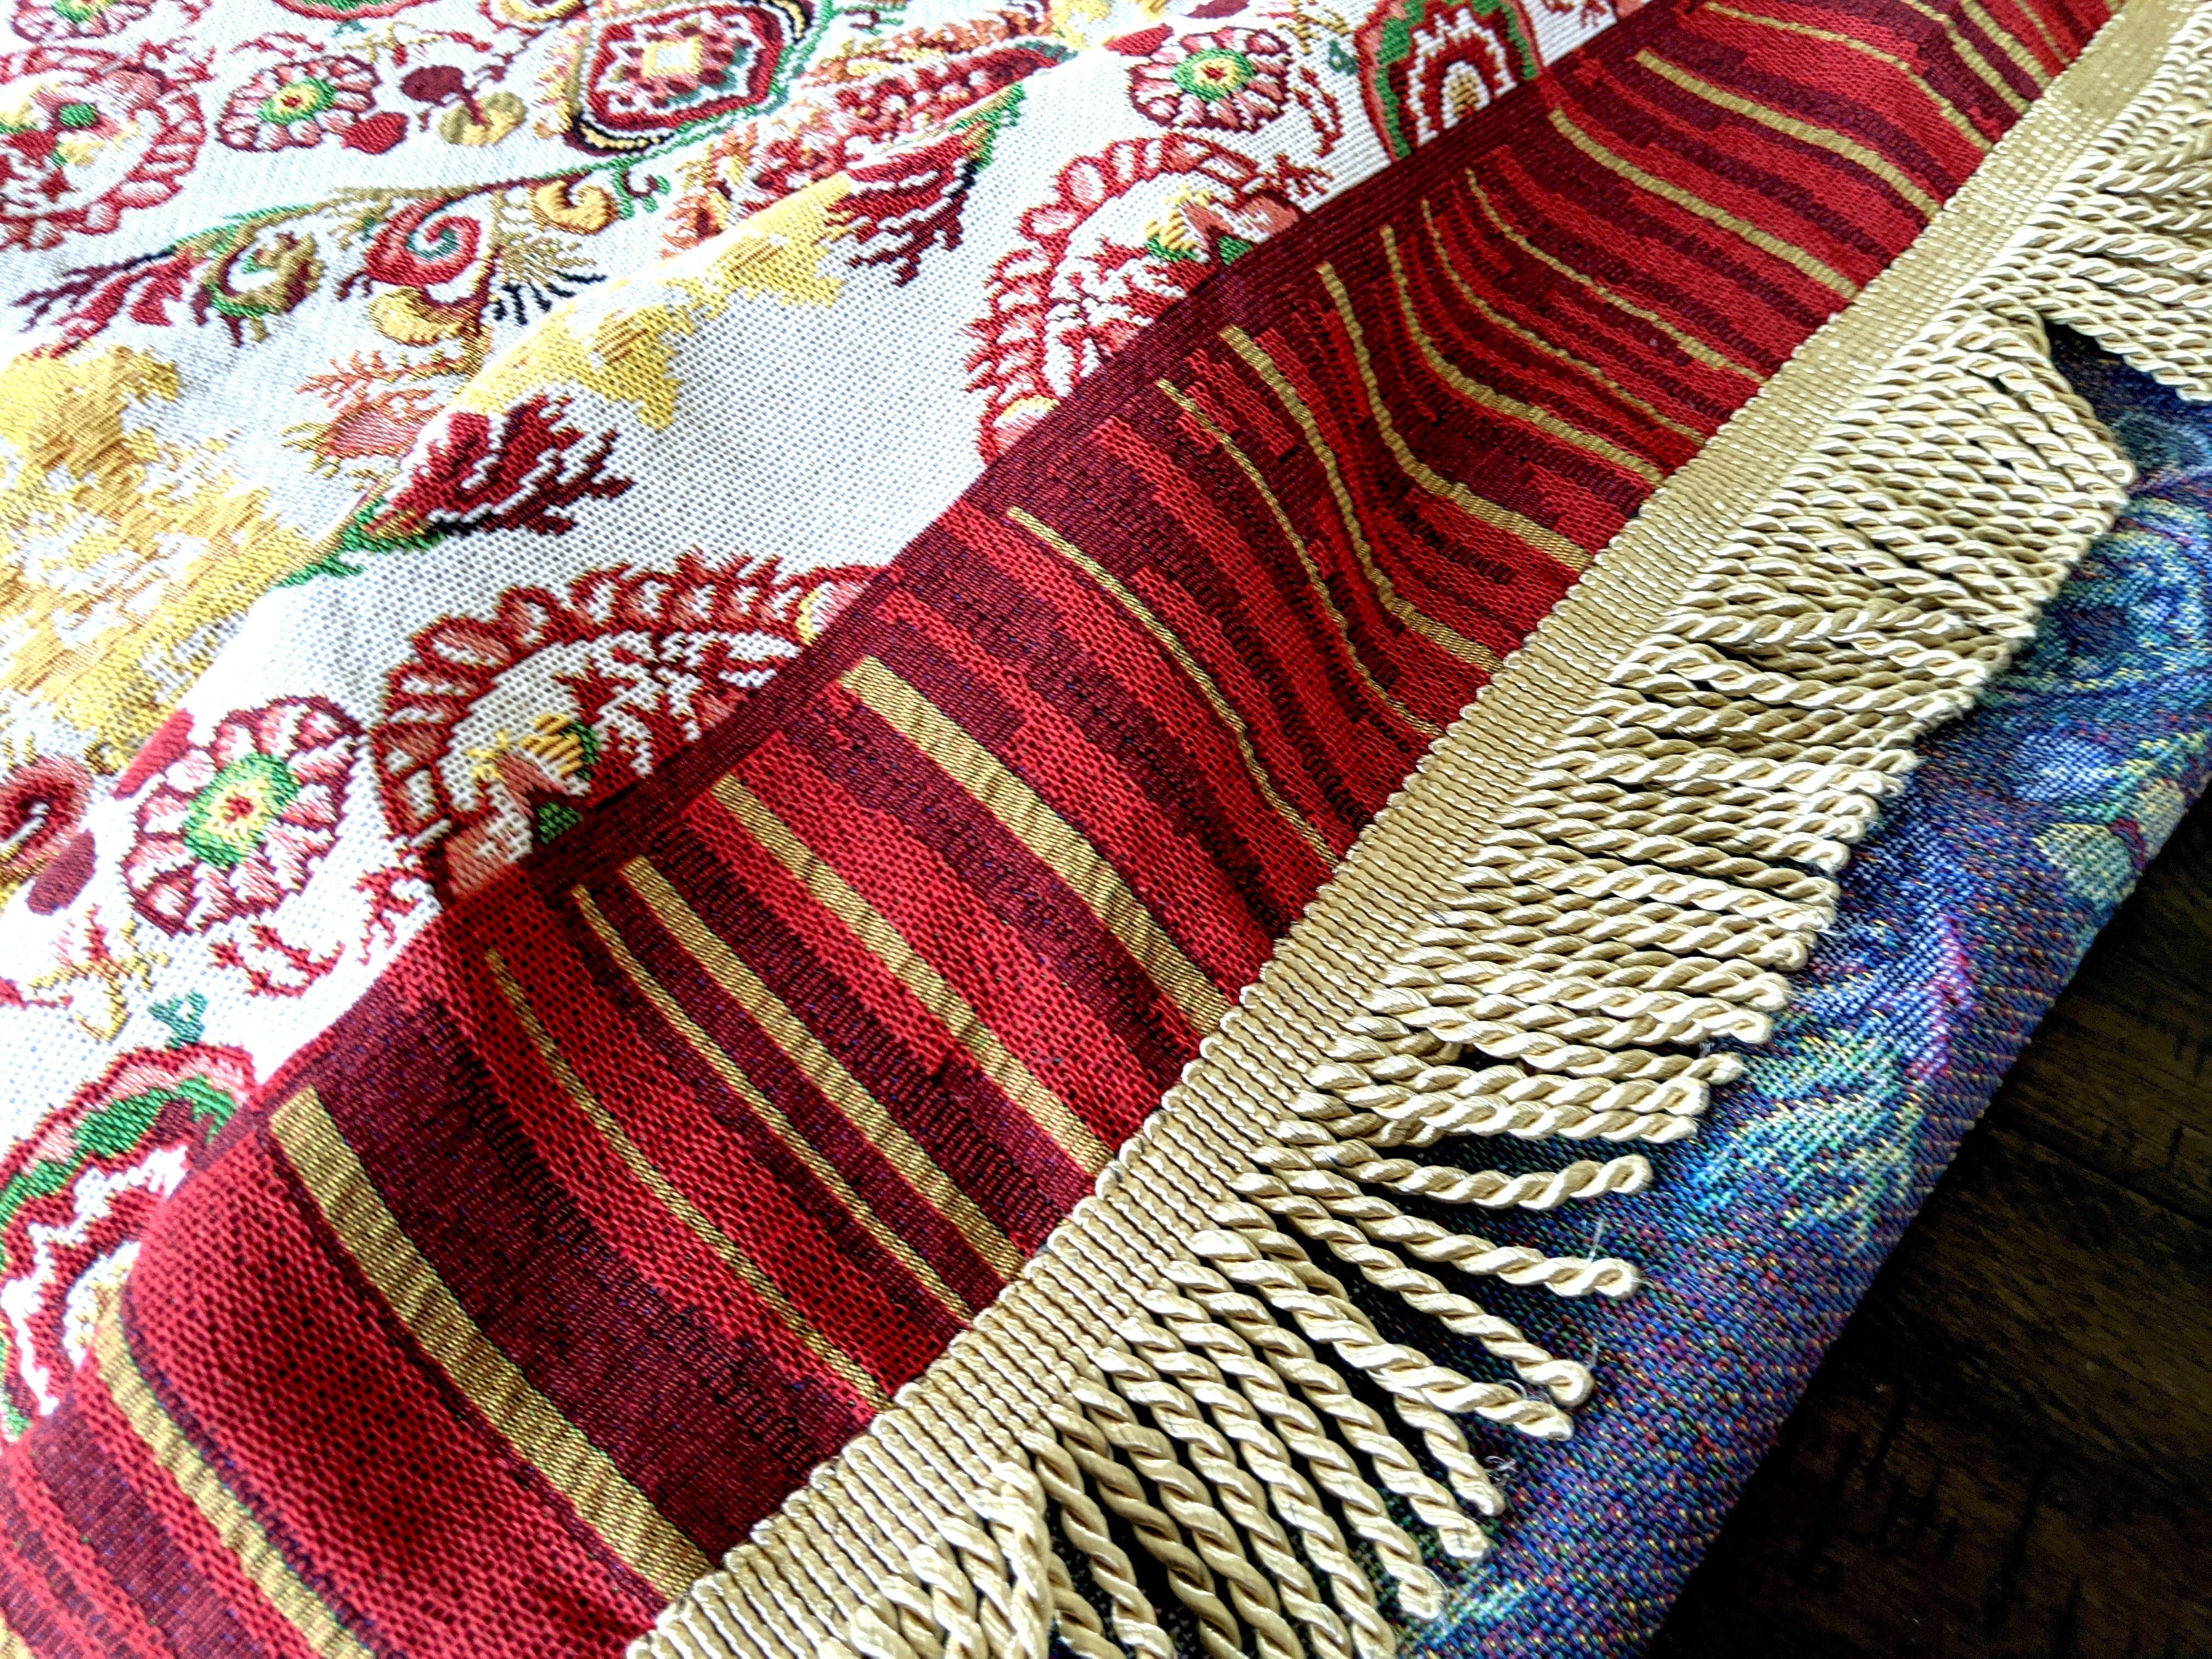 Tache Elegant Burgundy Ornate Paisley Woven Tapestry Tablecloth (18194)